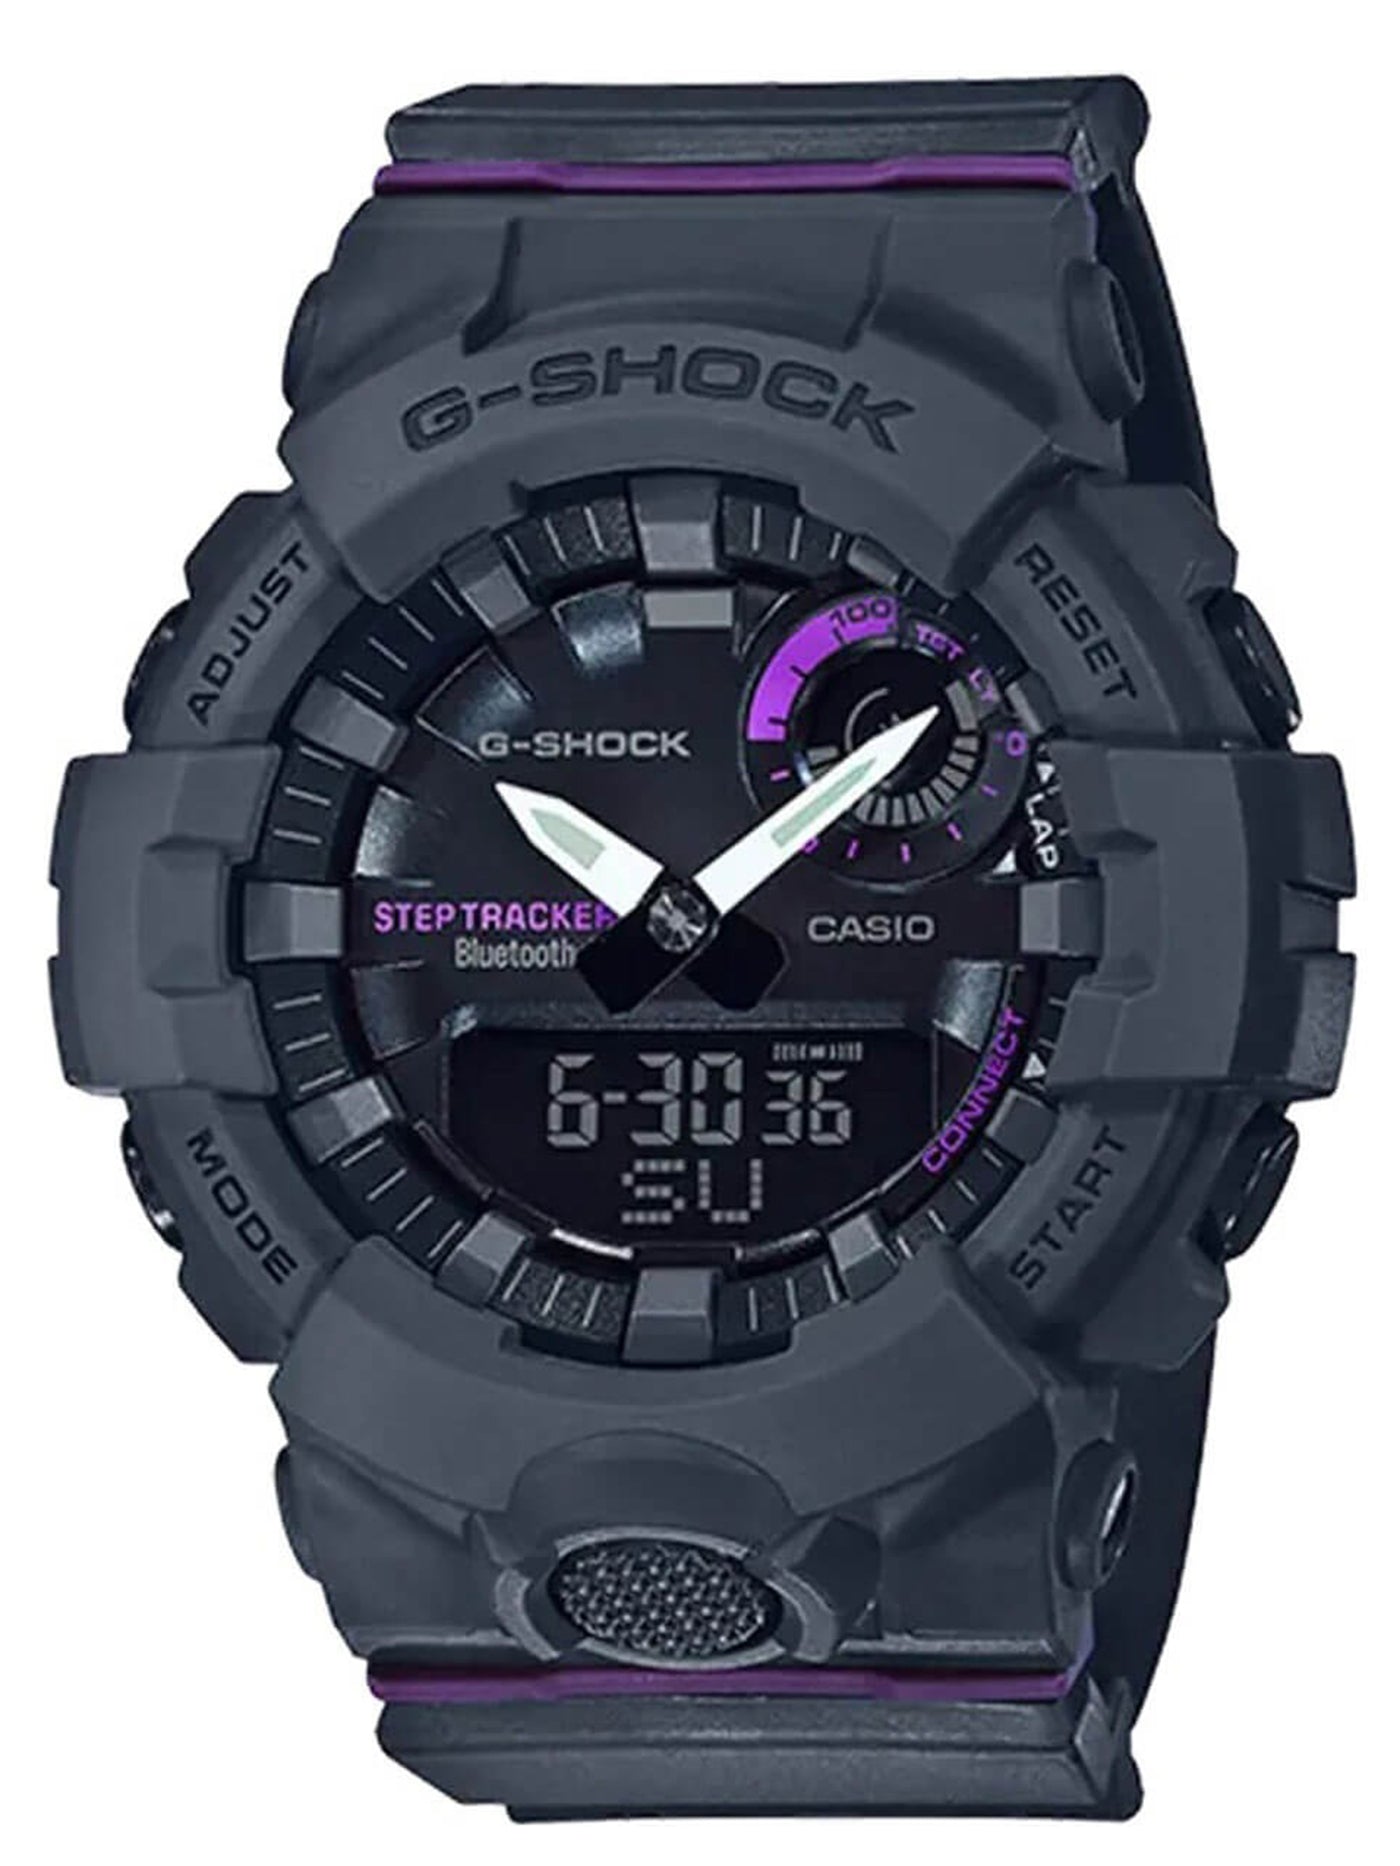 G-Shock S-Series Fitness Tracker Black Watch